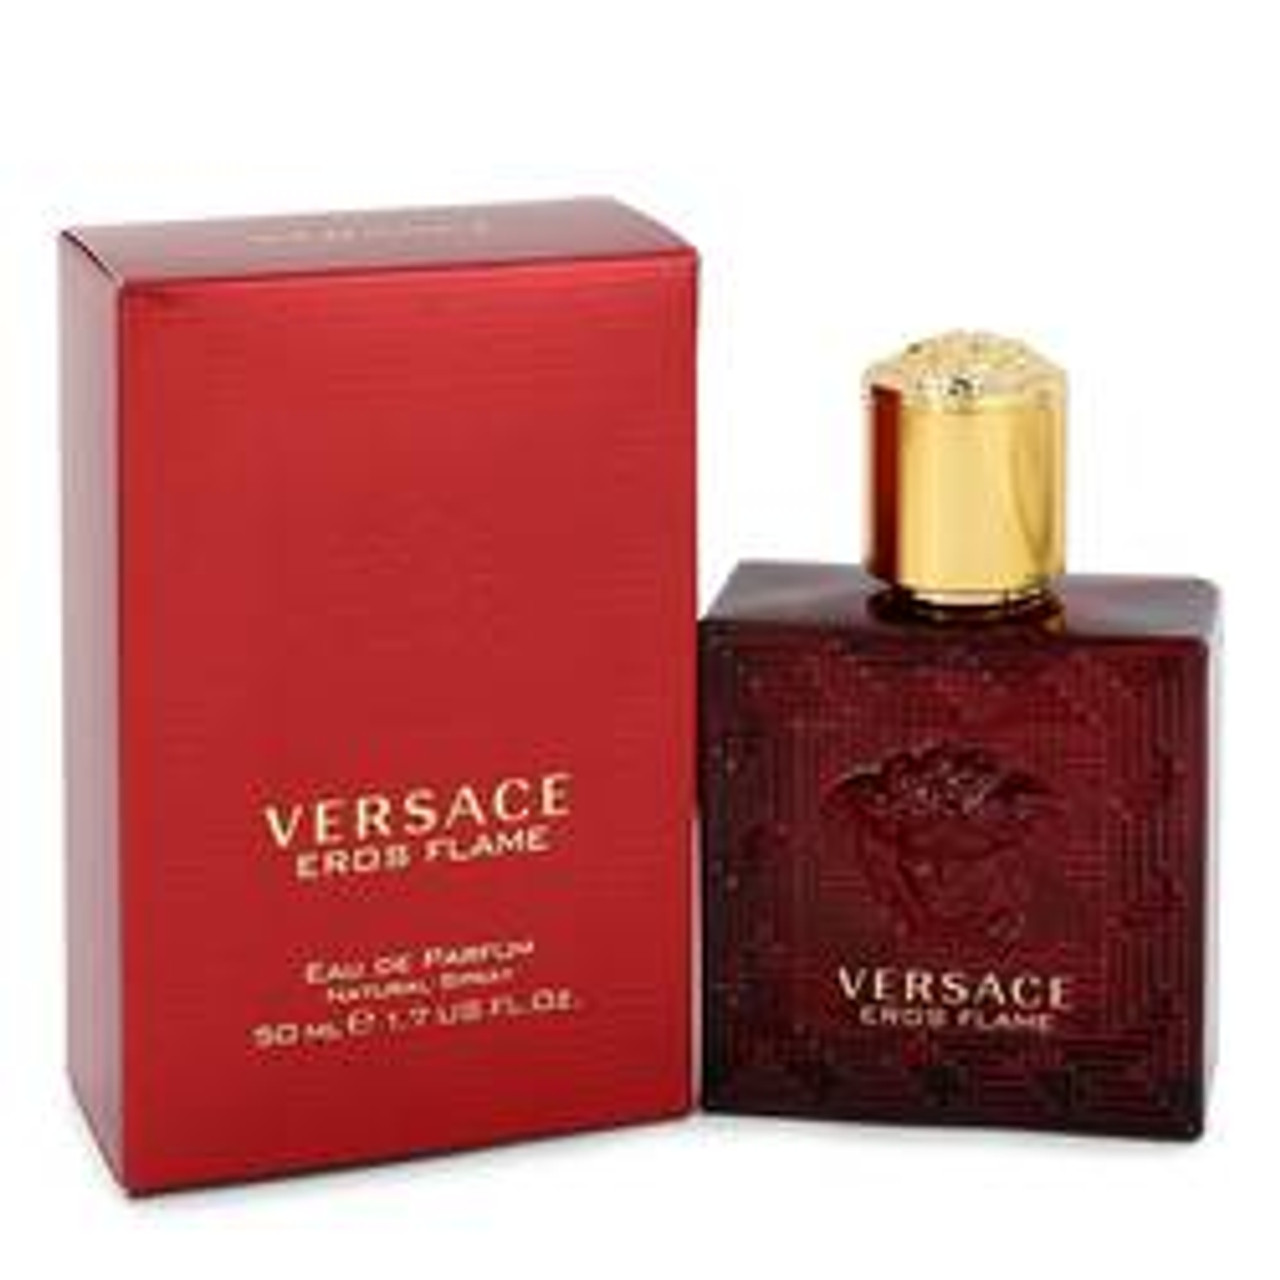 Versace Eros Flame Cologne By Versace Eau De Parfum Spray 1.7 oz for Men - *Pre-Order